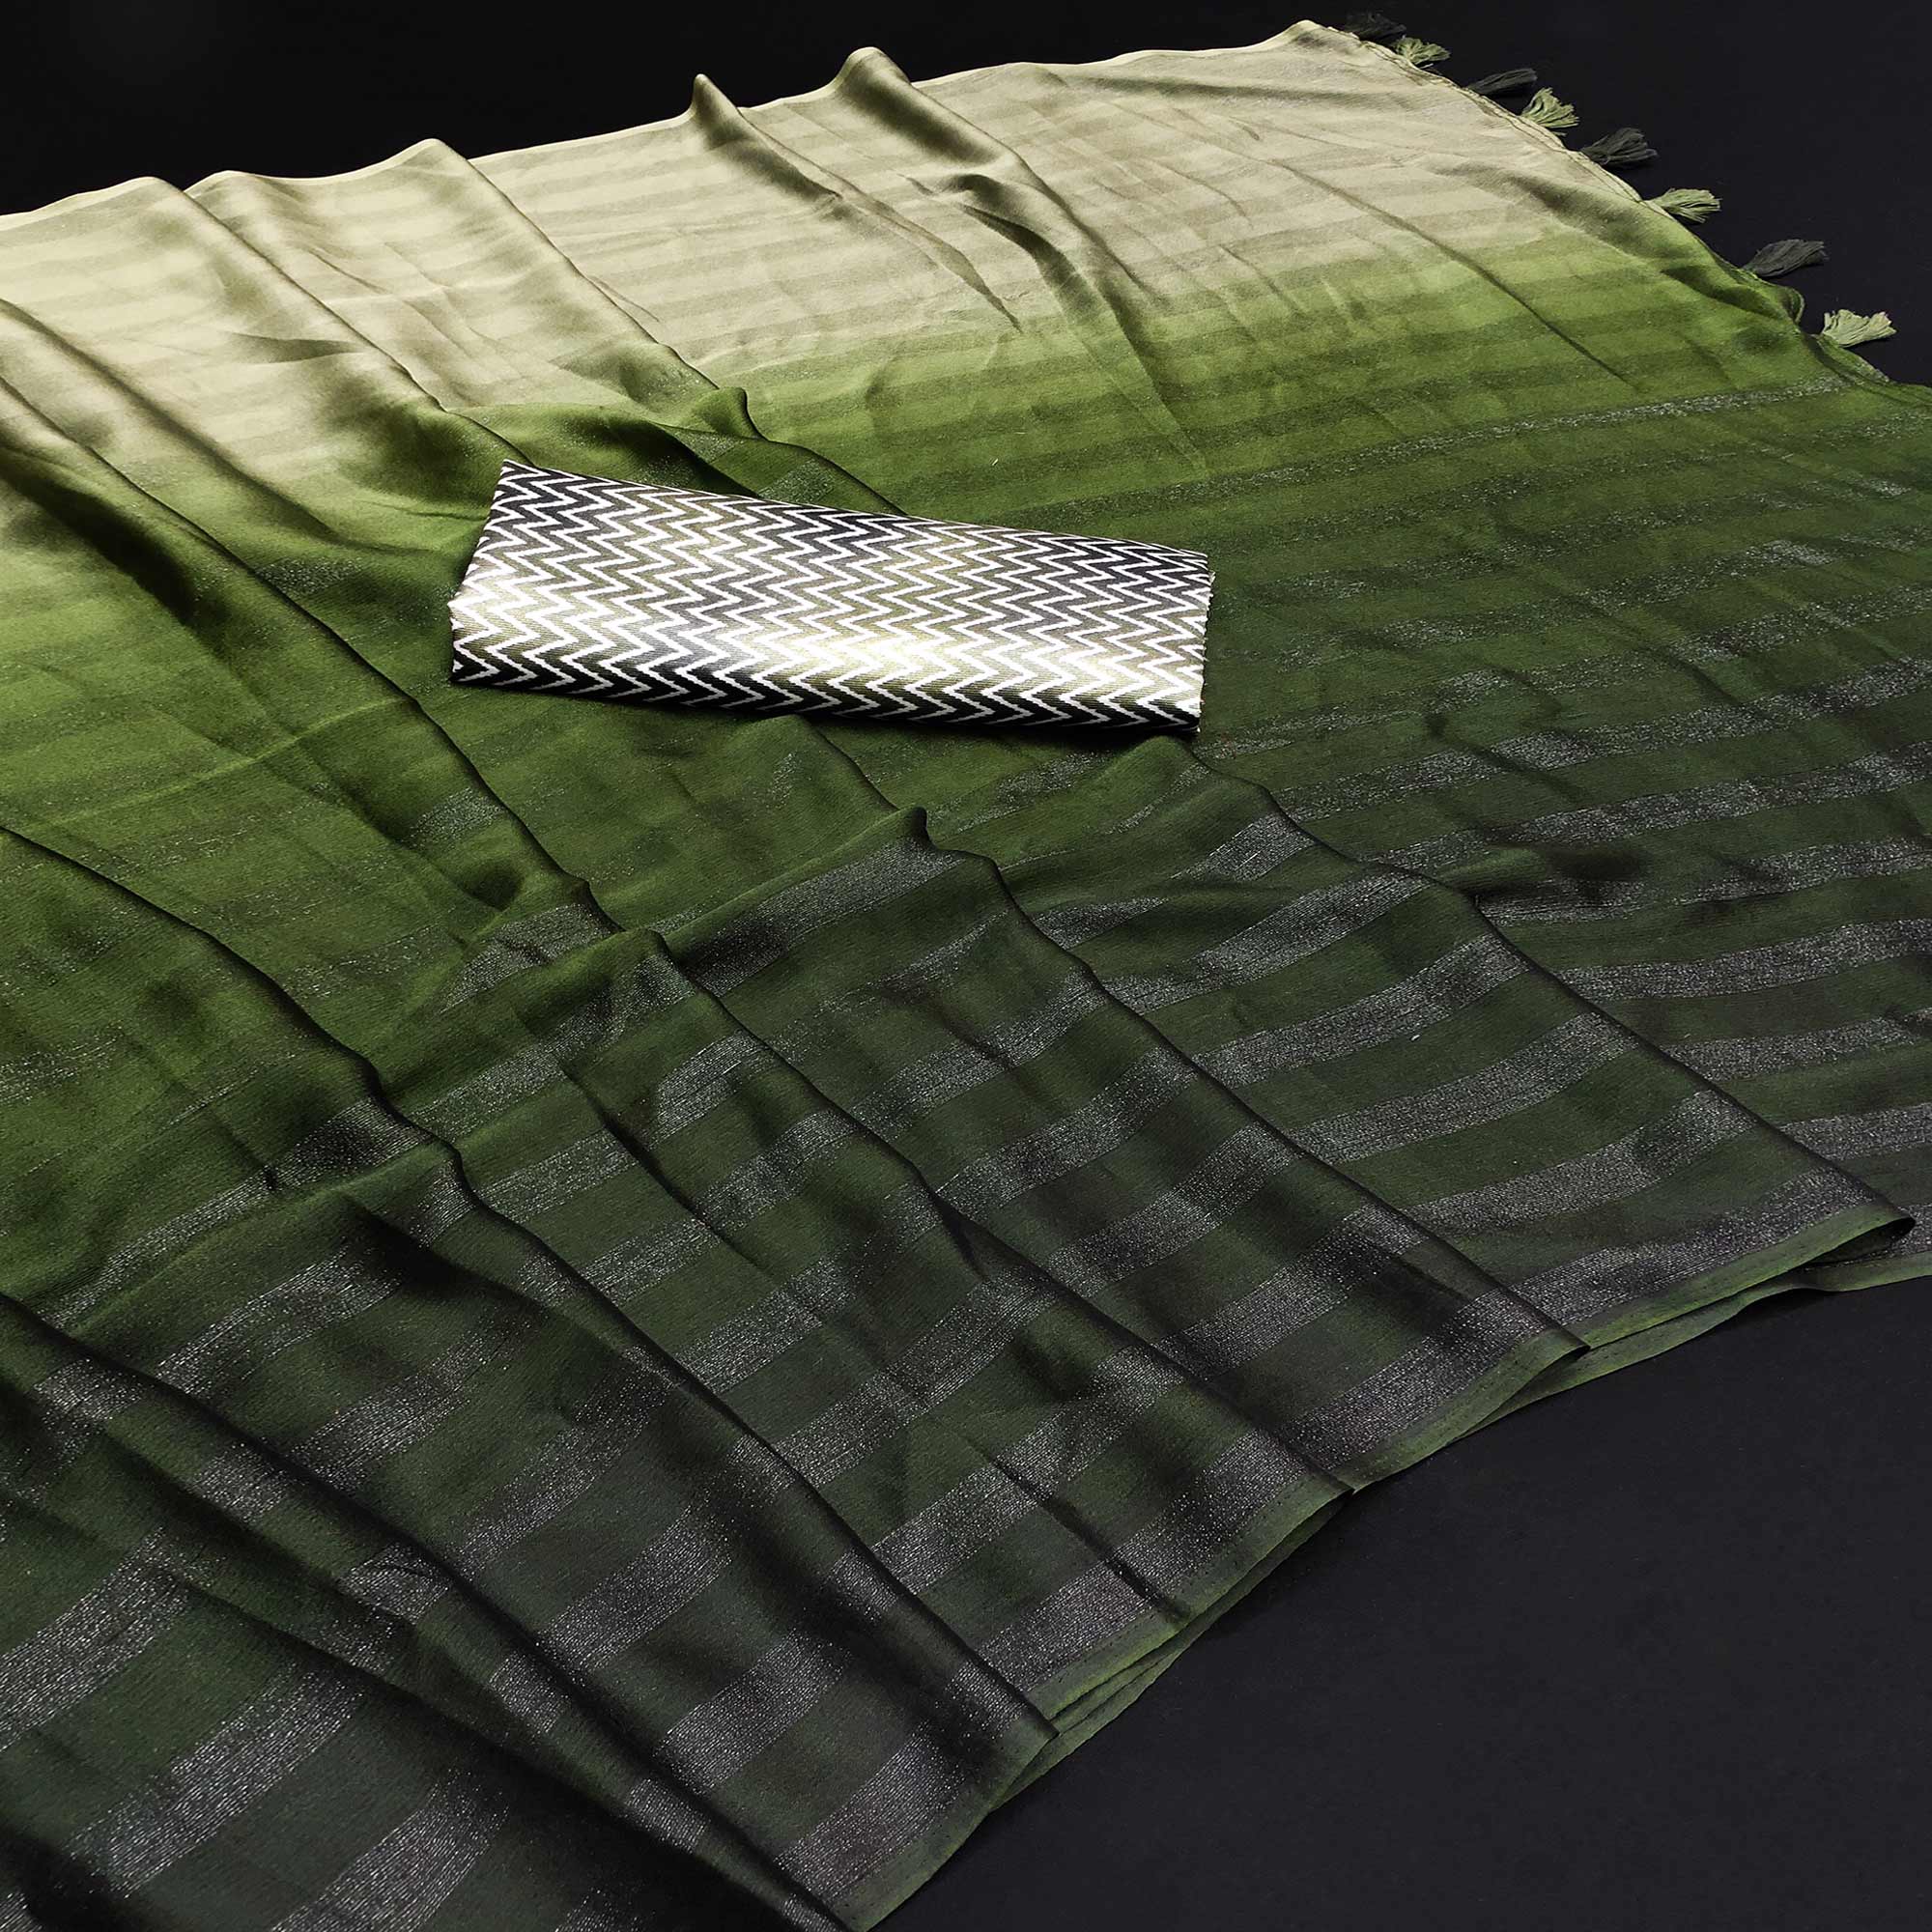 Green Woven Art Silk Saree With Tassels